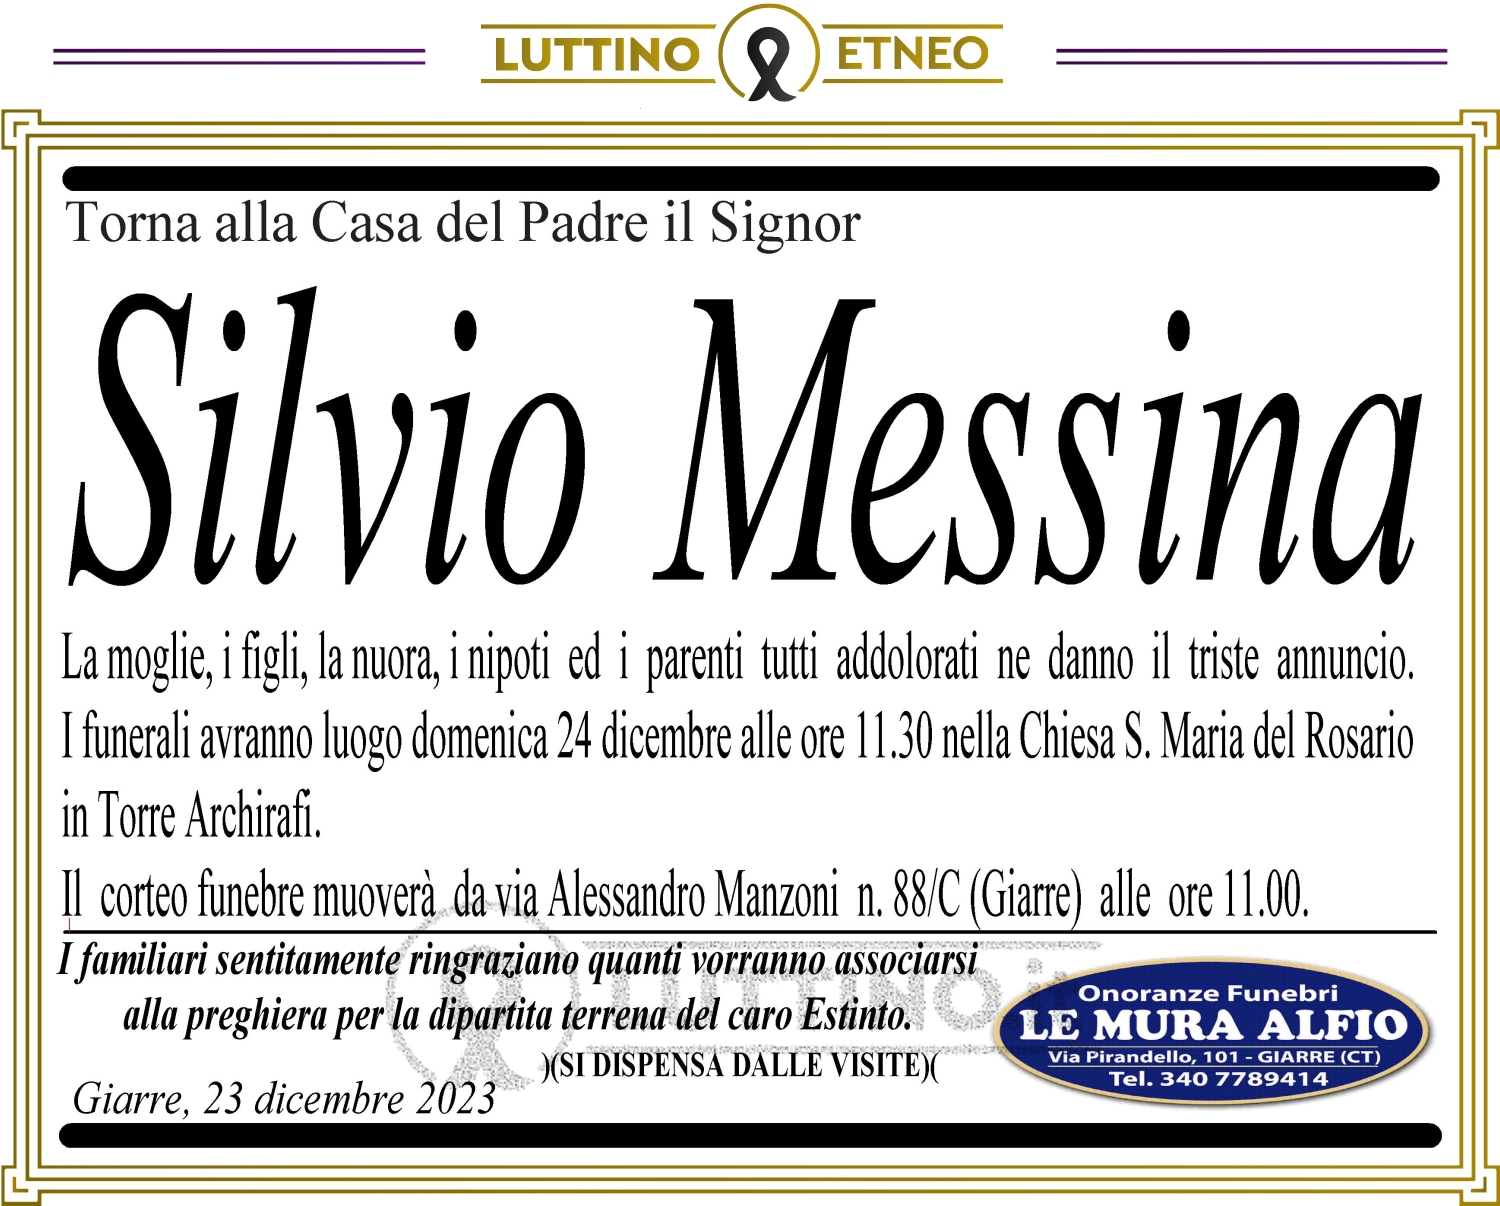 Silvio Messina